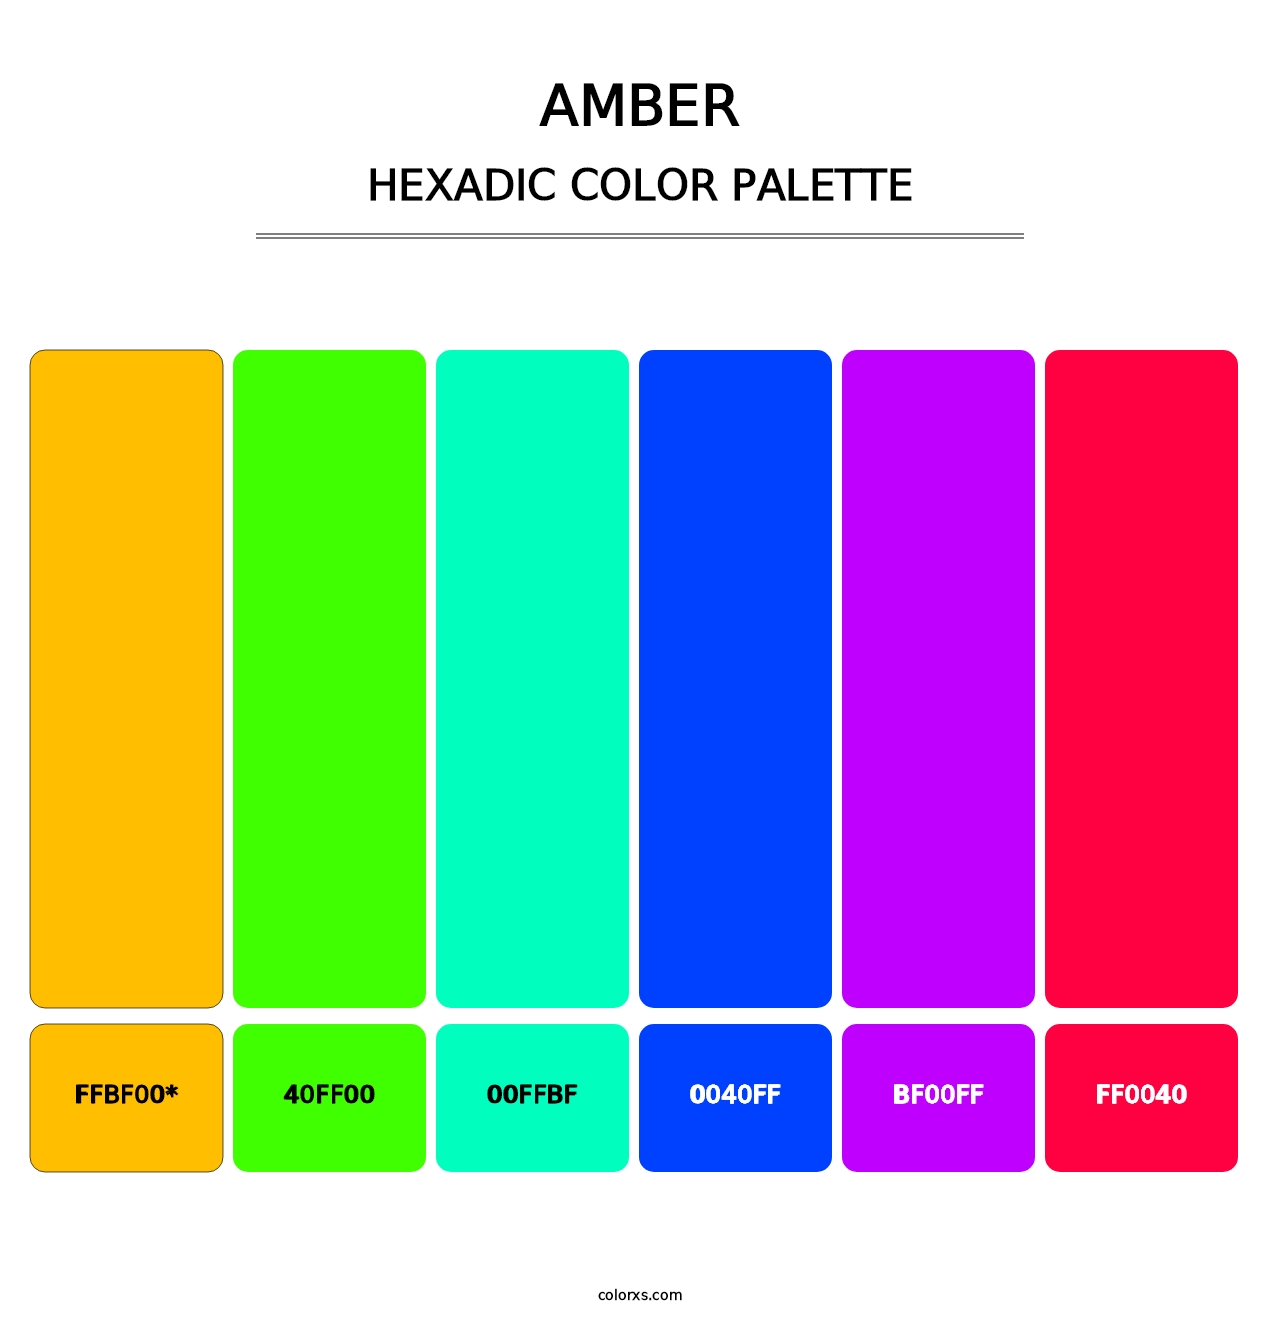 Amber - Hexadic Color Palette